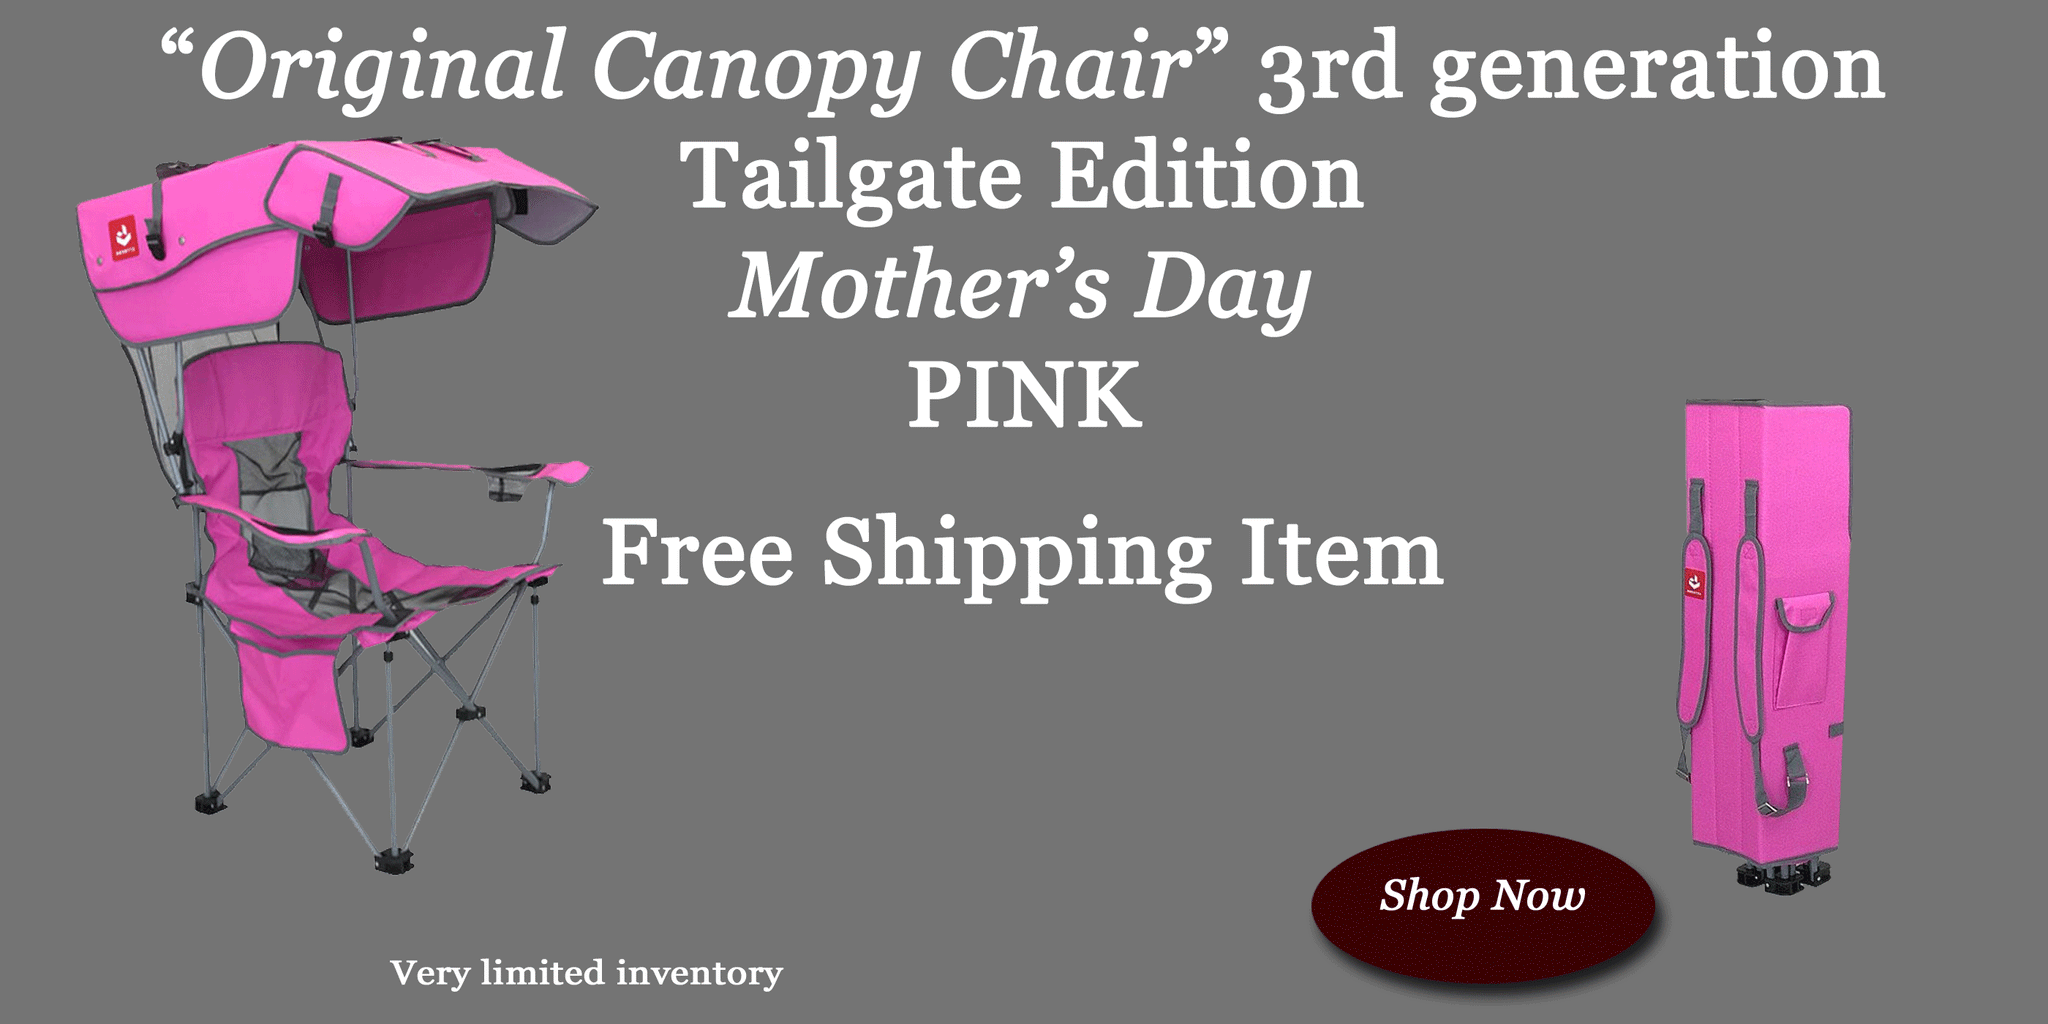 PINK "Original Canopy Chair"